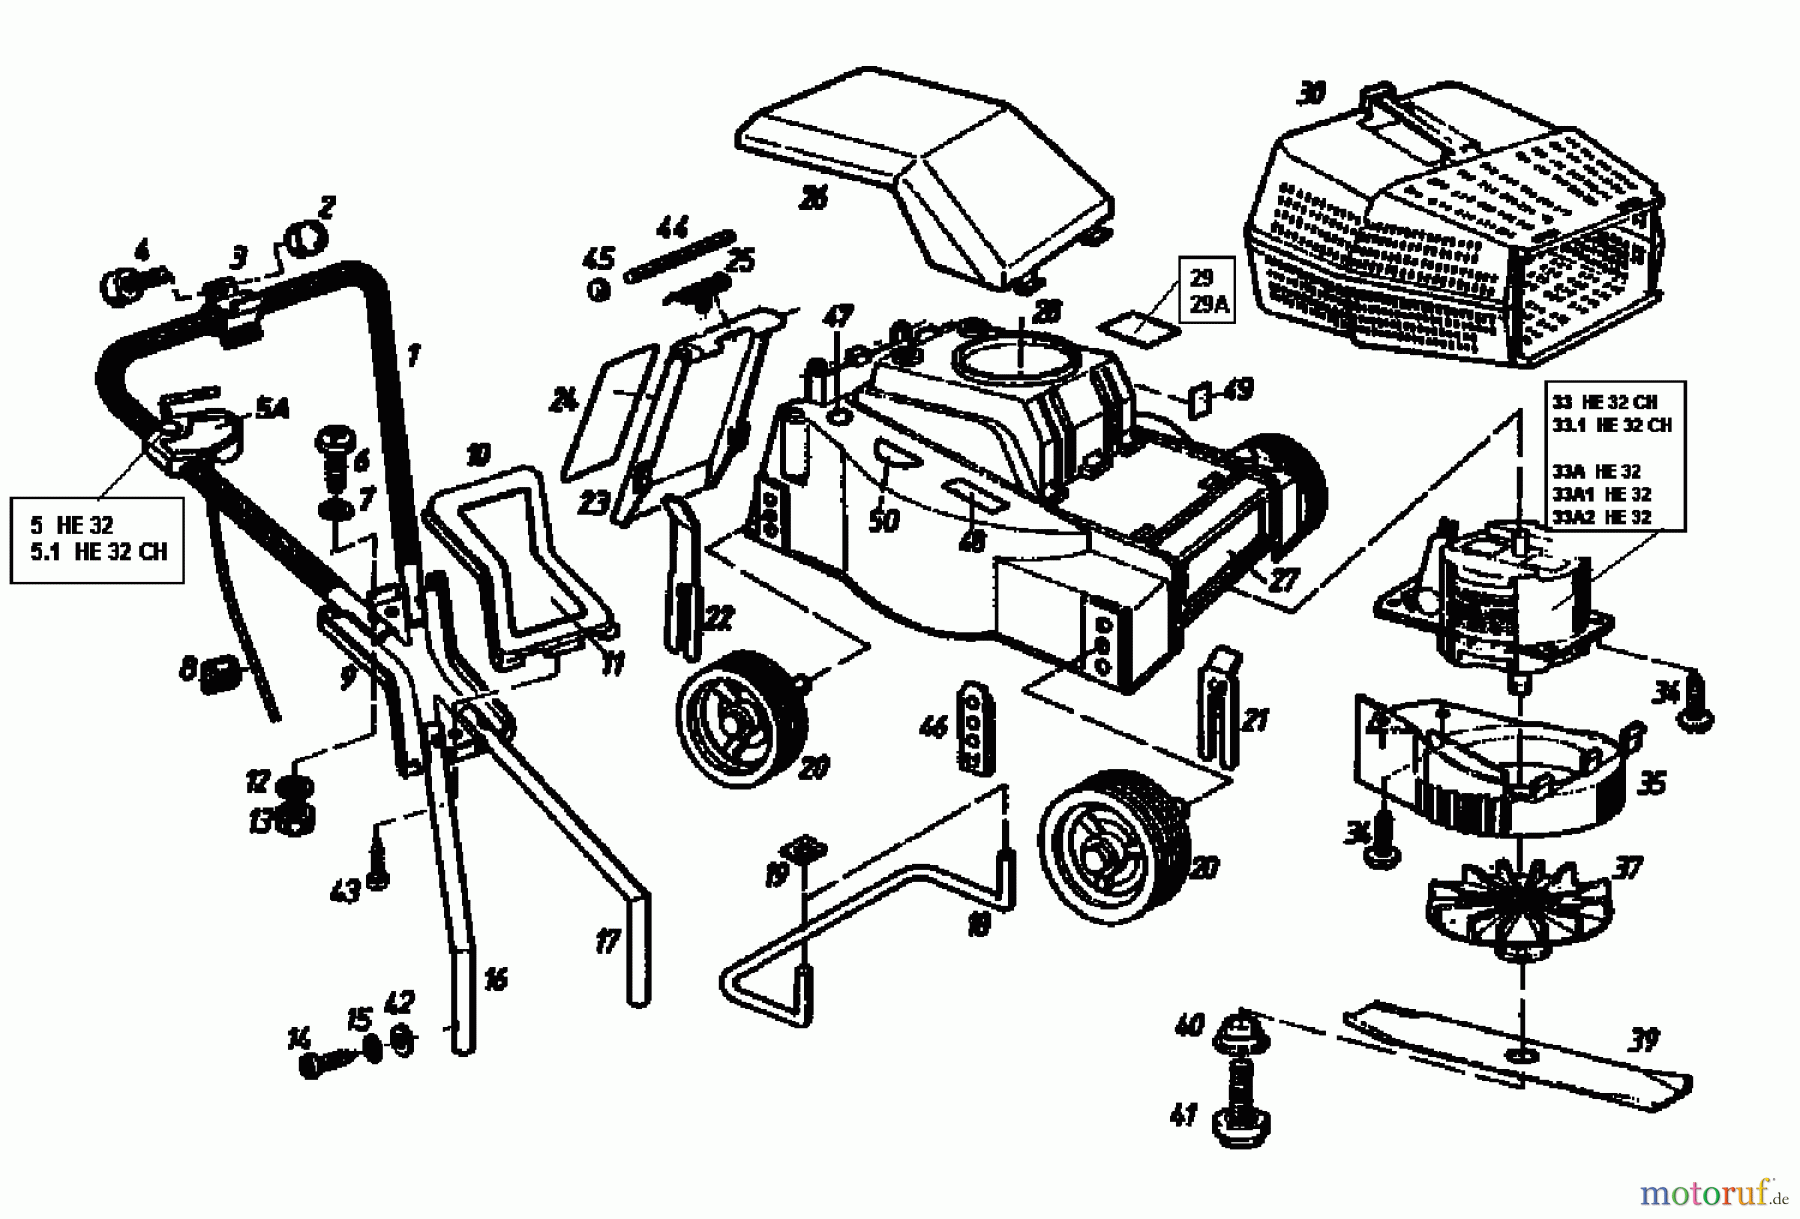  Gutbrod Electric mower HE 32 02872.09  (1987) Basic machine